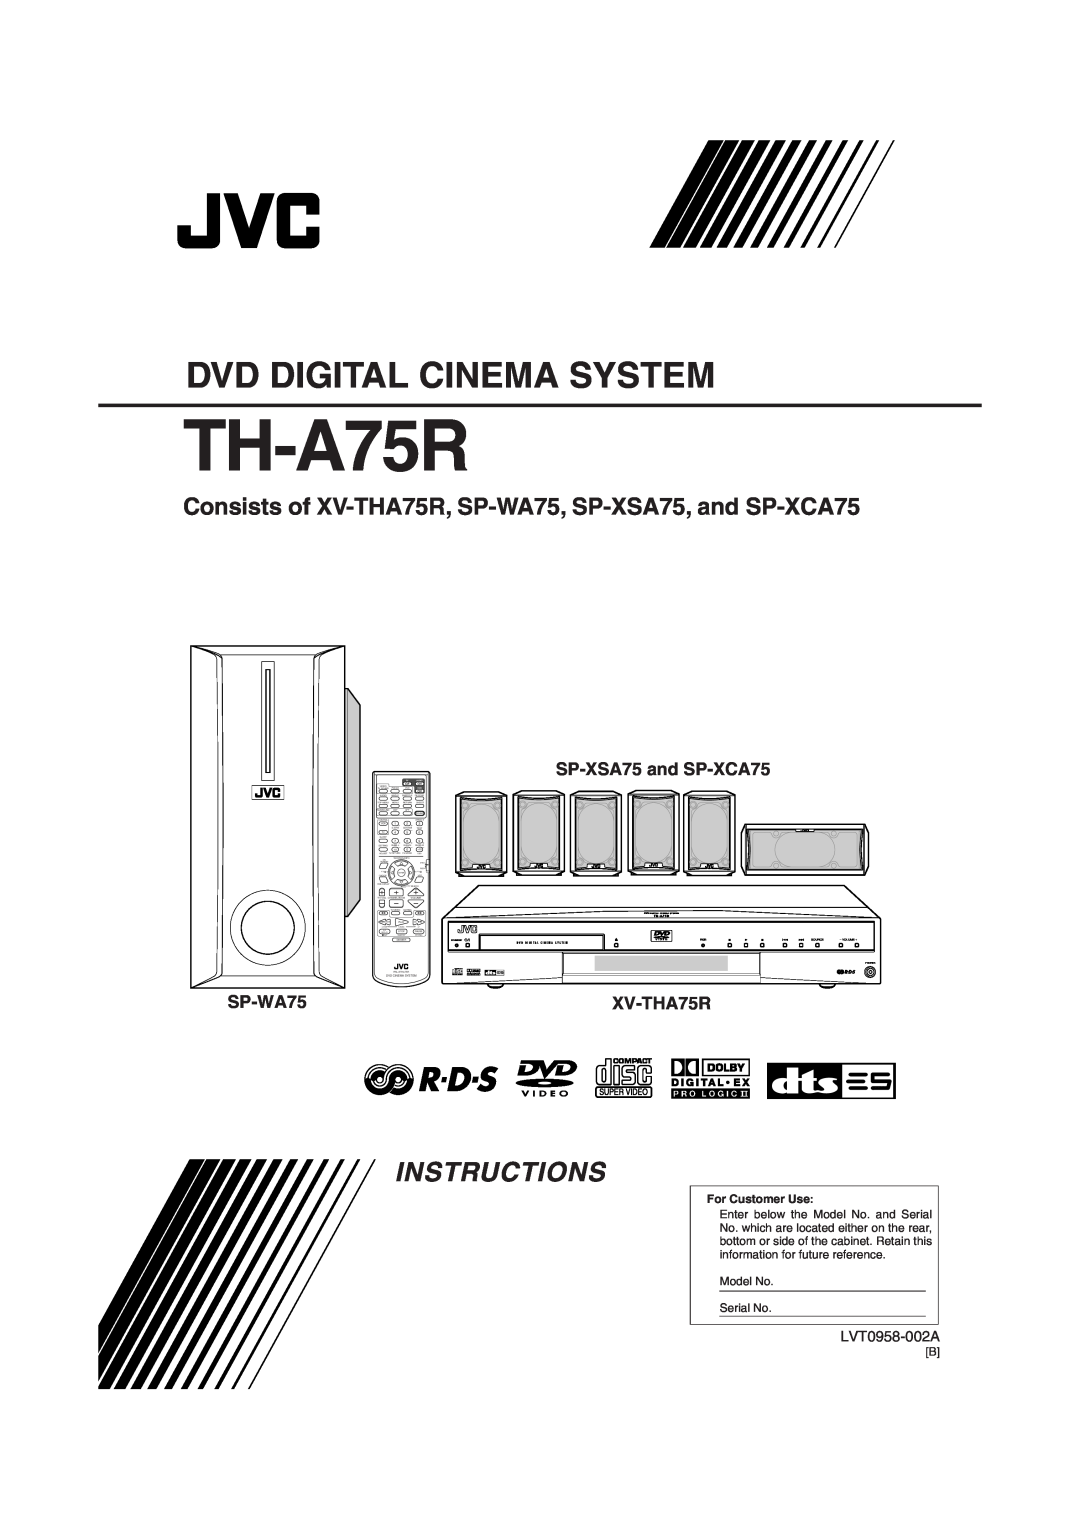 JVC manual SP-WA75, SP-XSA75and SP-XCA75, XV-THA75R, TH-A75R, Dvd Digital Cinema System, Instructions, LVT0958-002A 